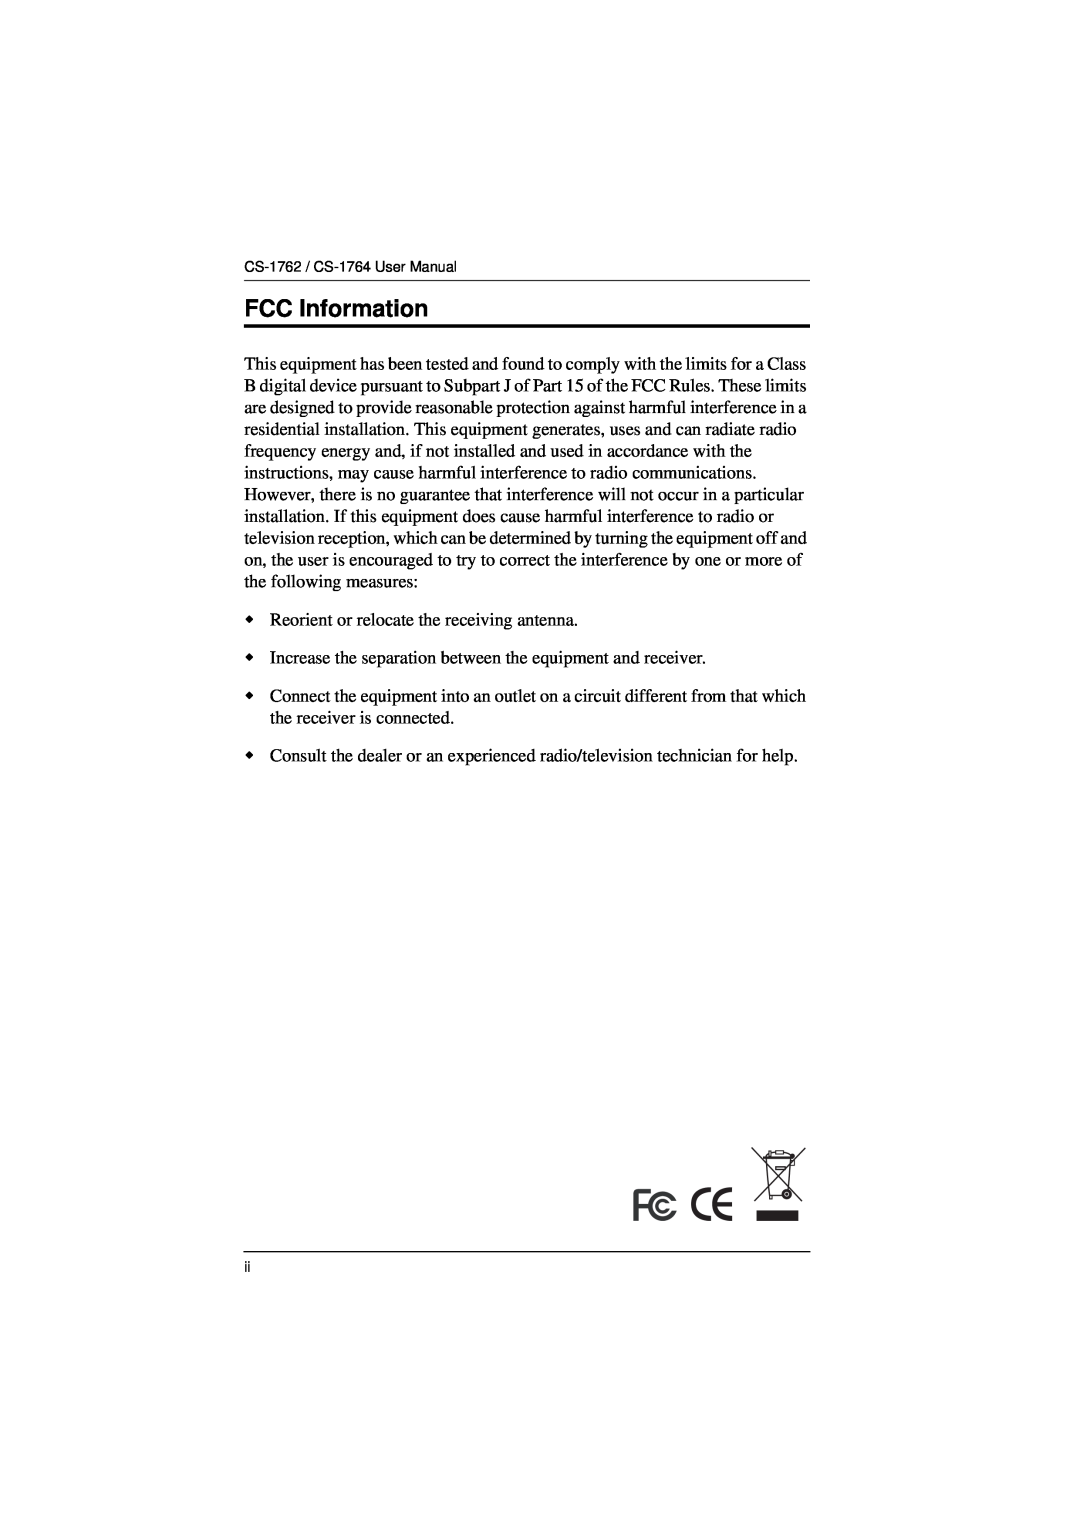 ATEN Technology CS-1764, CS-1762 user manual FCC Information 